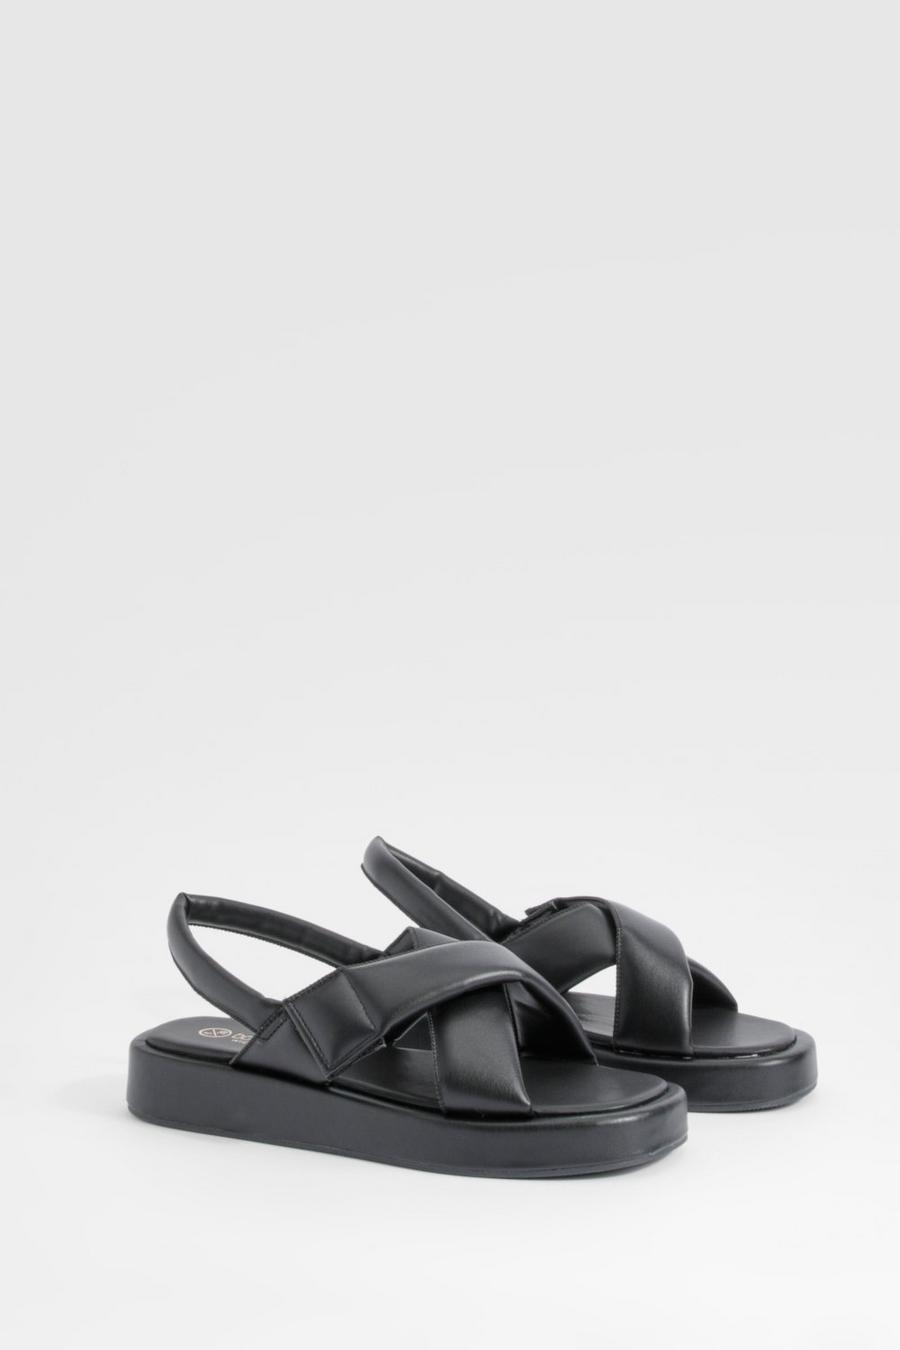 Sandalias planas gruesas de holgura ancha acolchadas con tiras cruzadas, Black image number 1